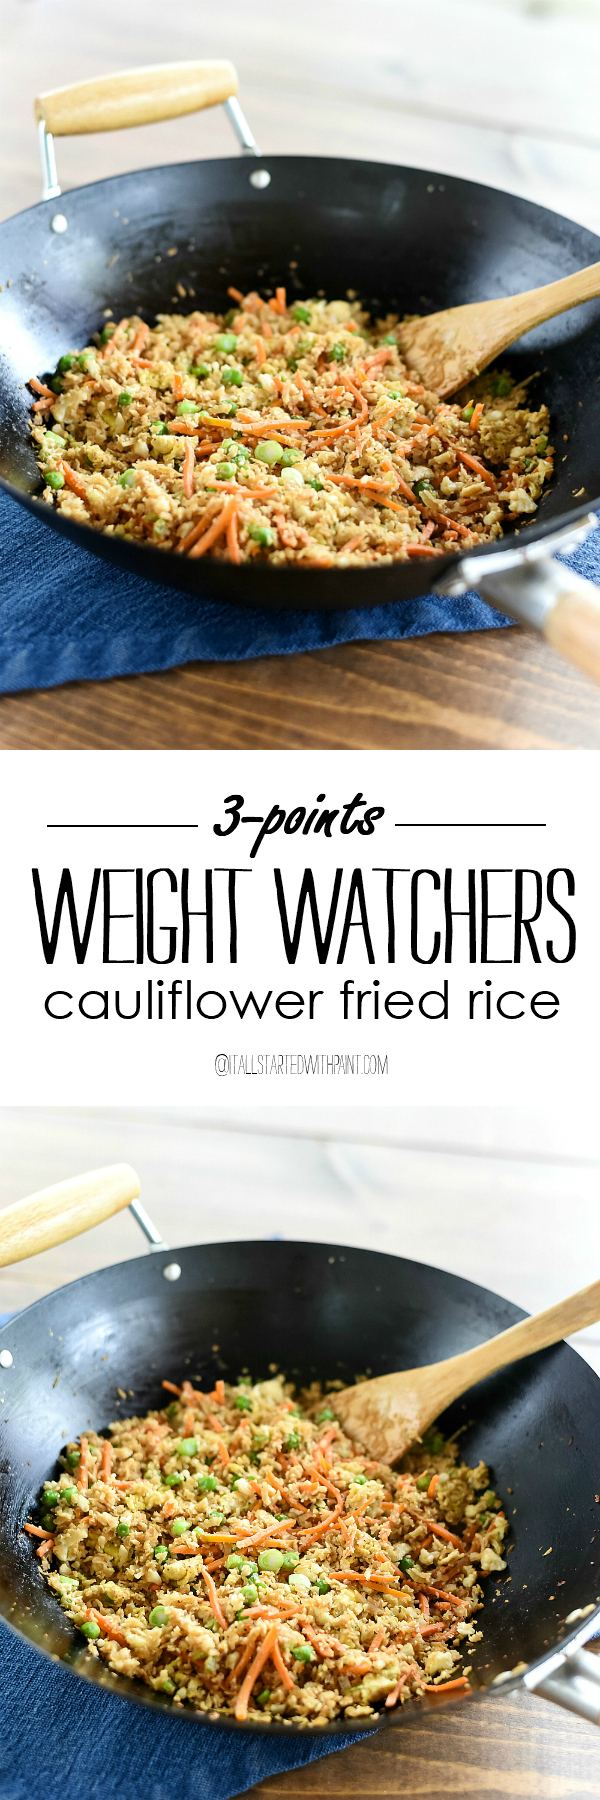 Weight Watchers Cauliflower Fried Rice - Cauliflower Recipe Ideas - Weight Watchers Entree Ideas - Low Point Weight Watchers Recipe Ideas